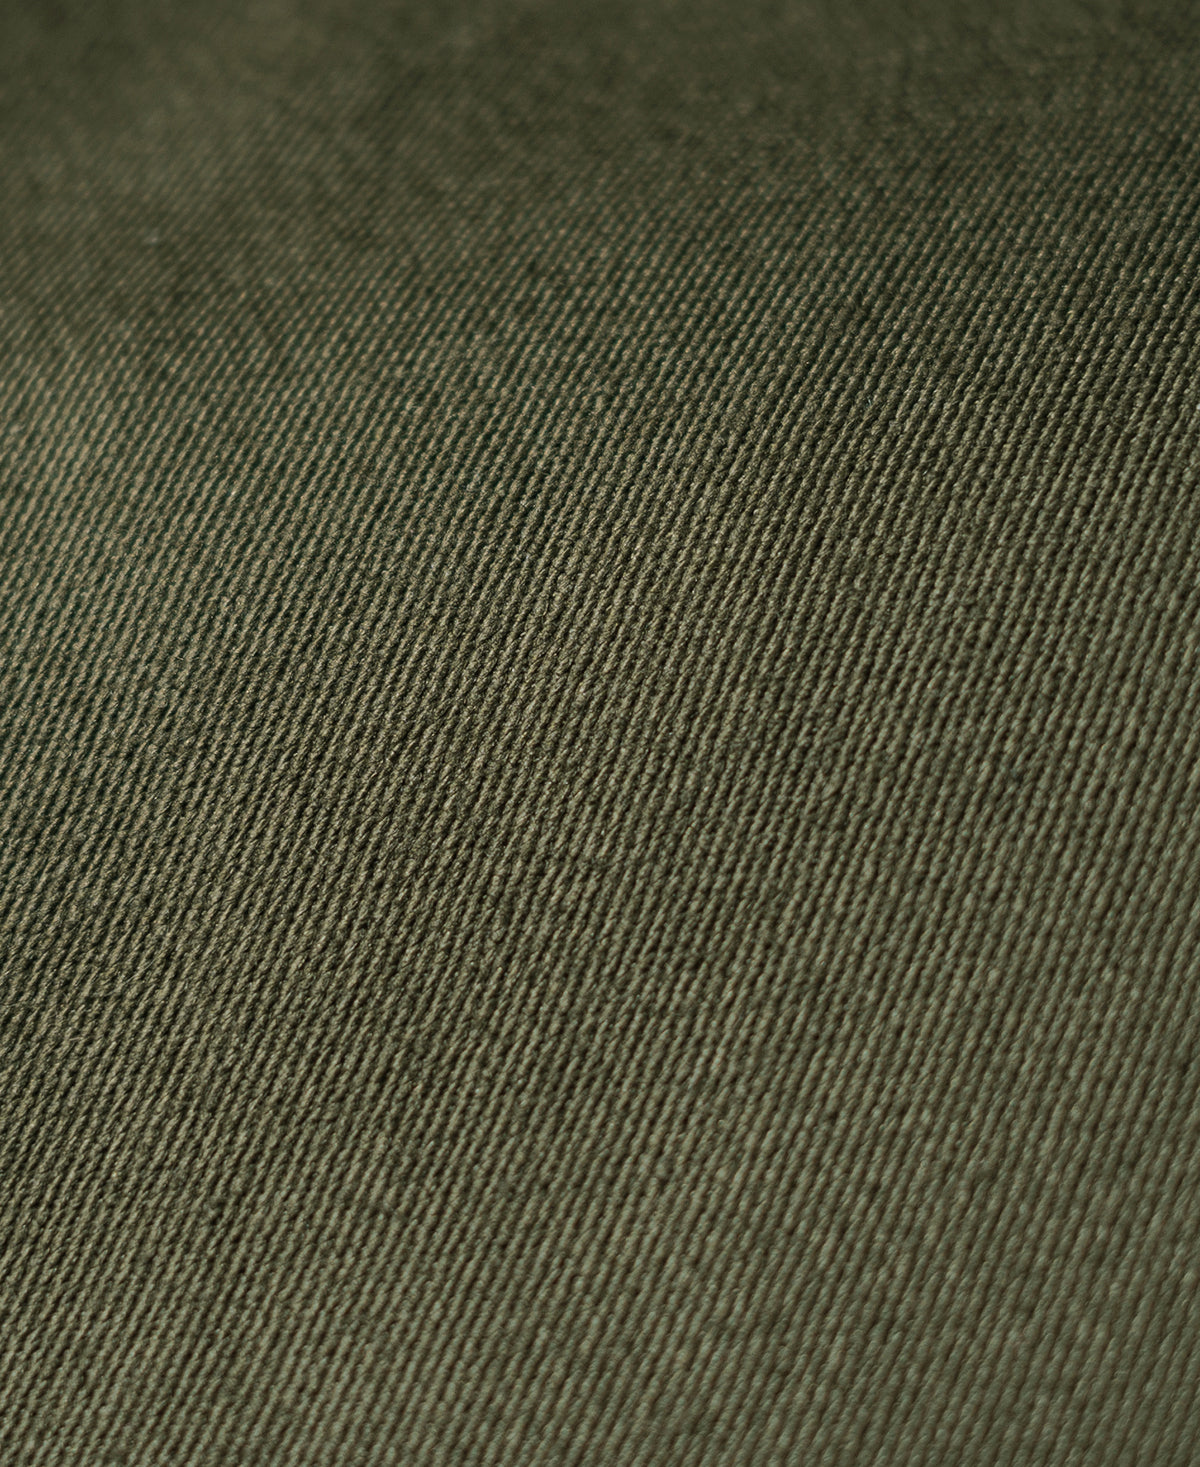 Final Version USN A-2 Deck Jacket (Polyester Lamb Wool)